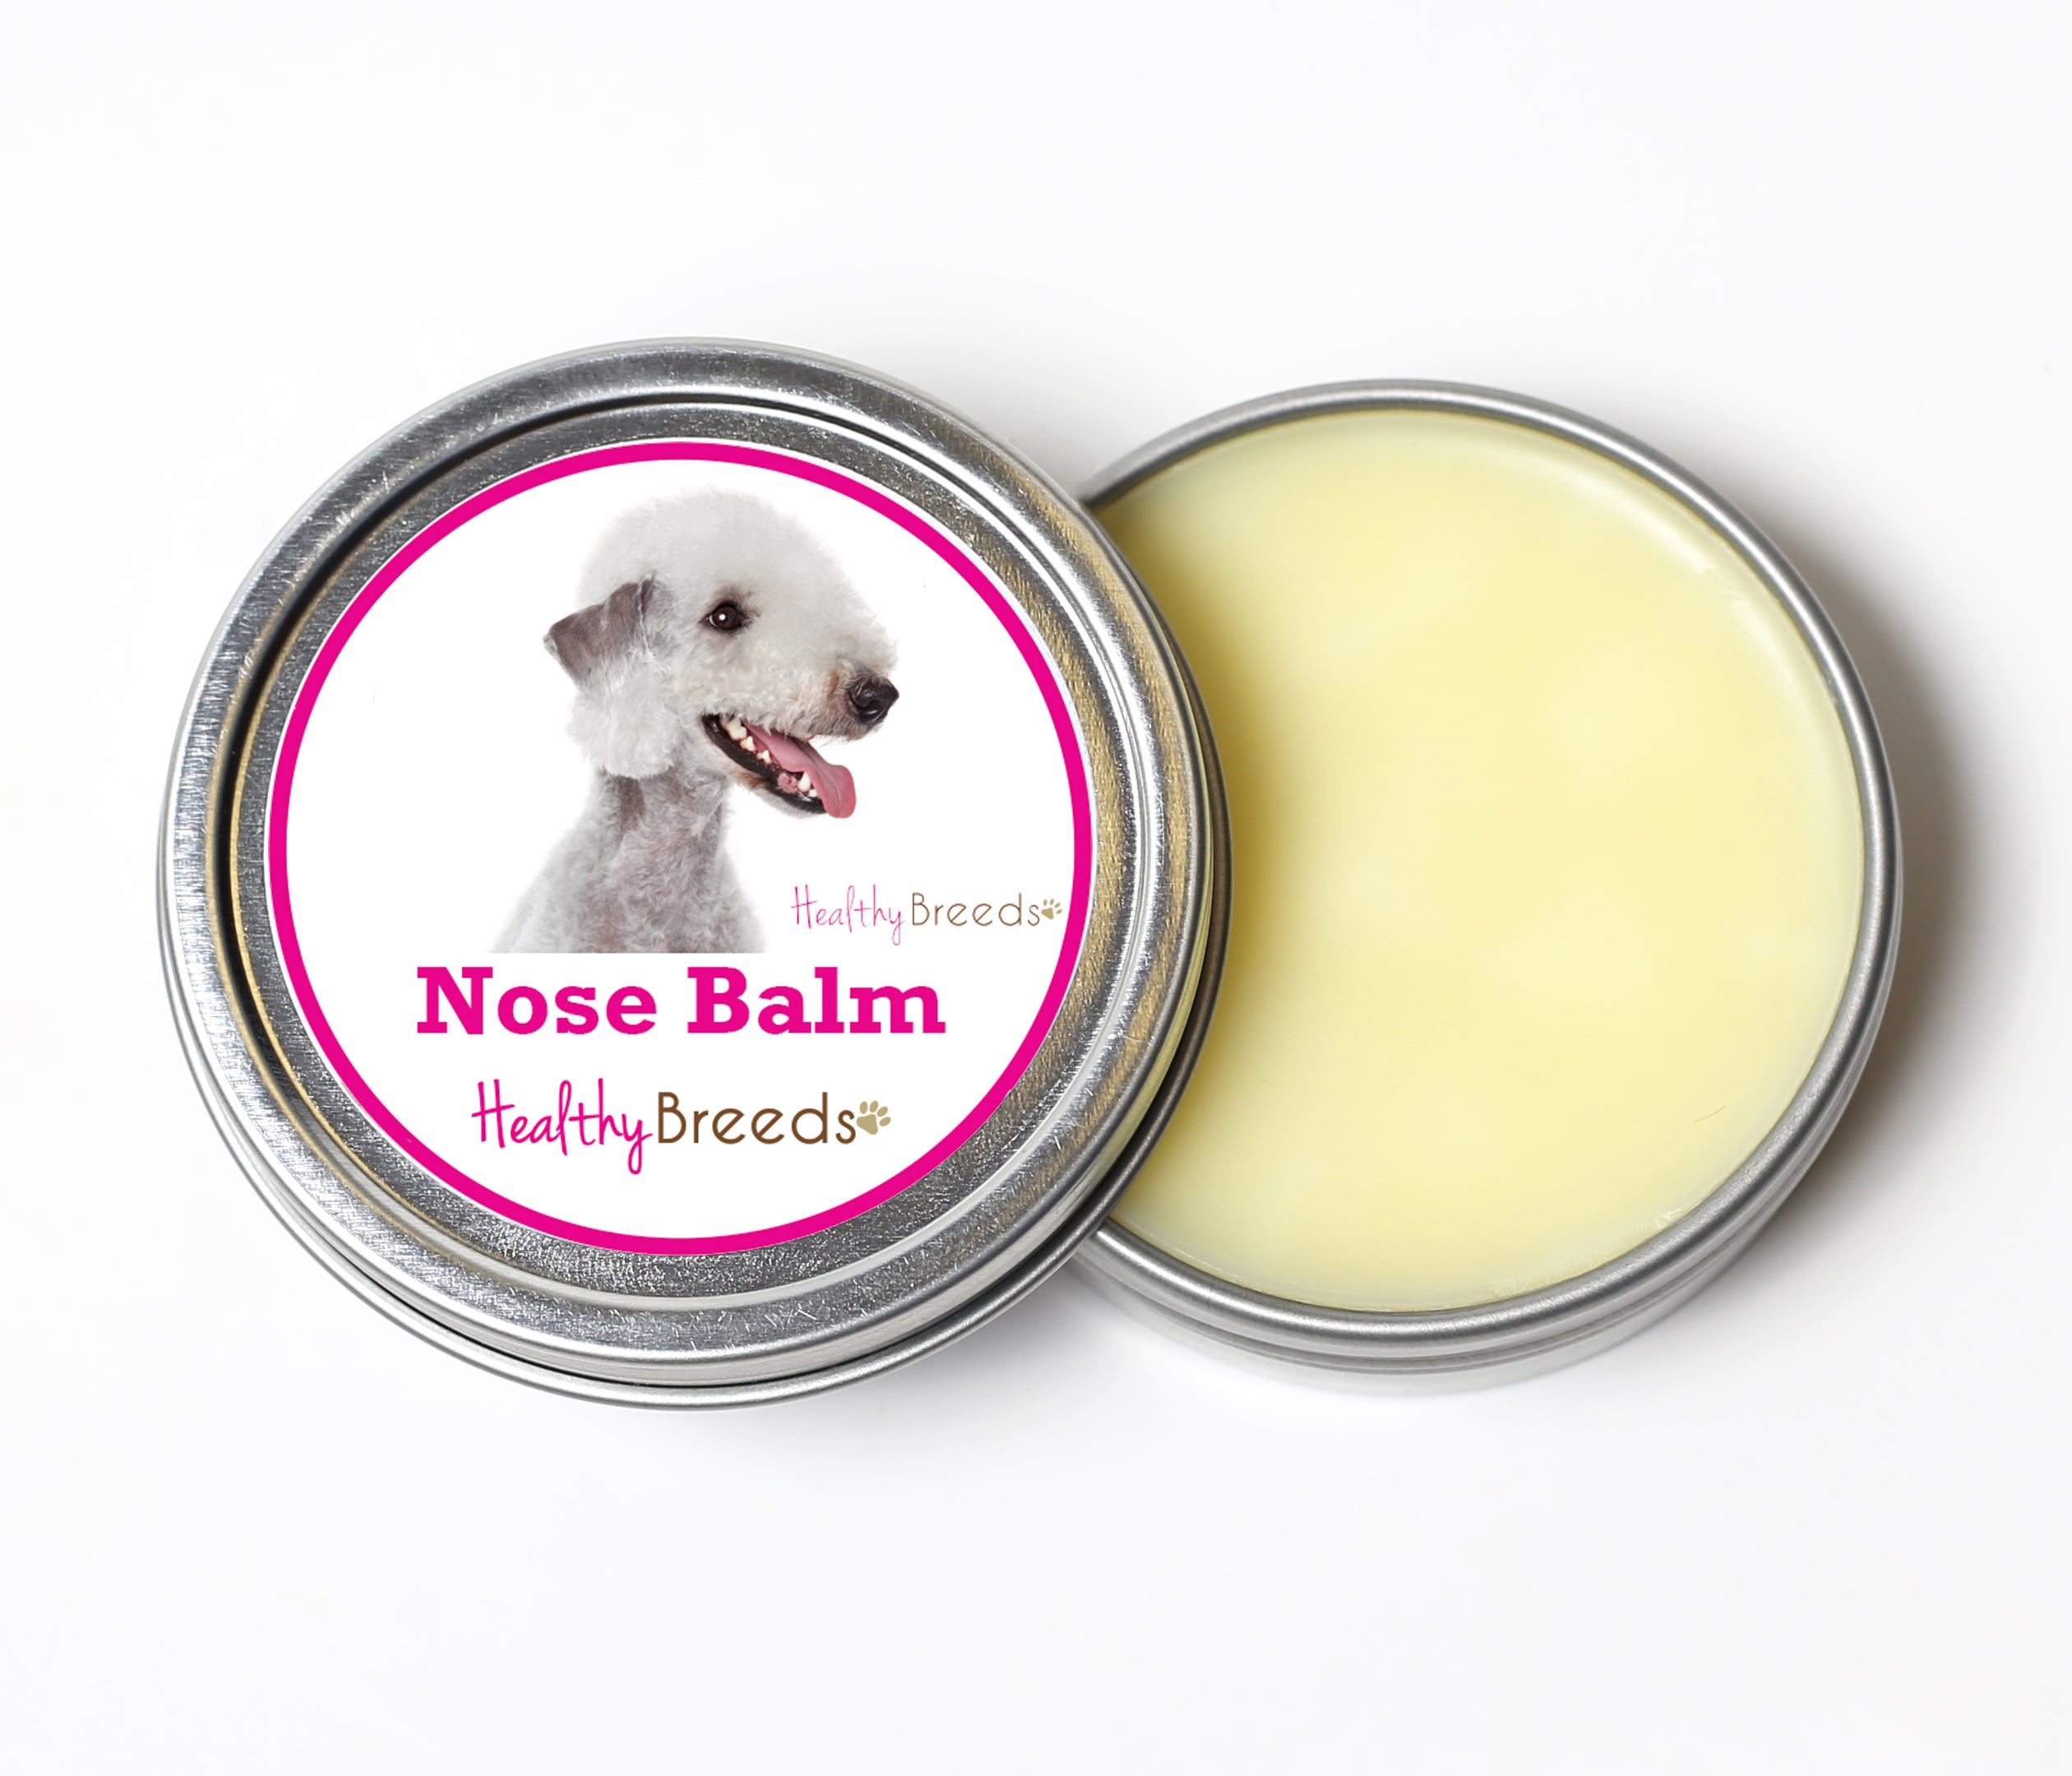 Bedlington Terrier Dog Nose Balm 2 oz